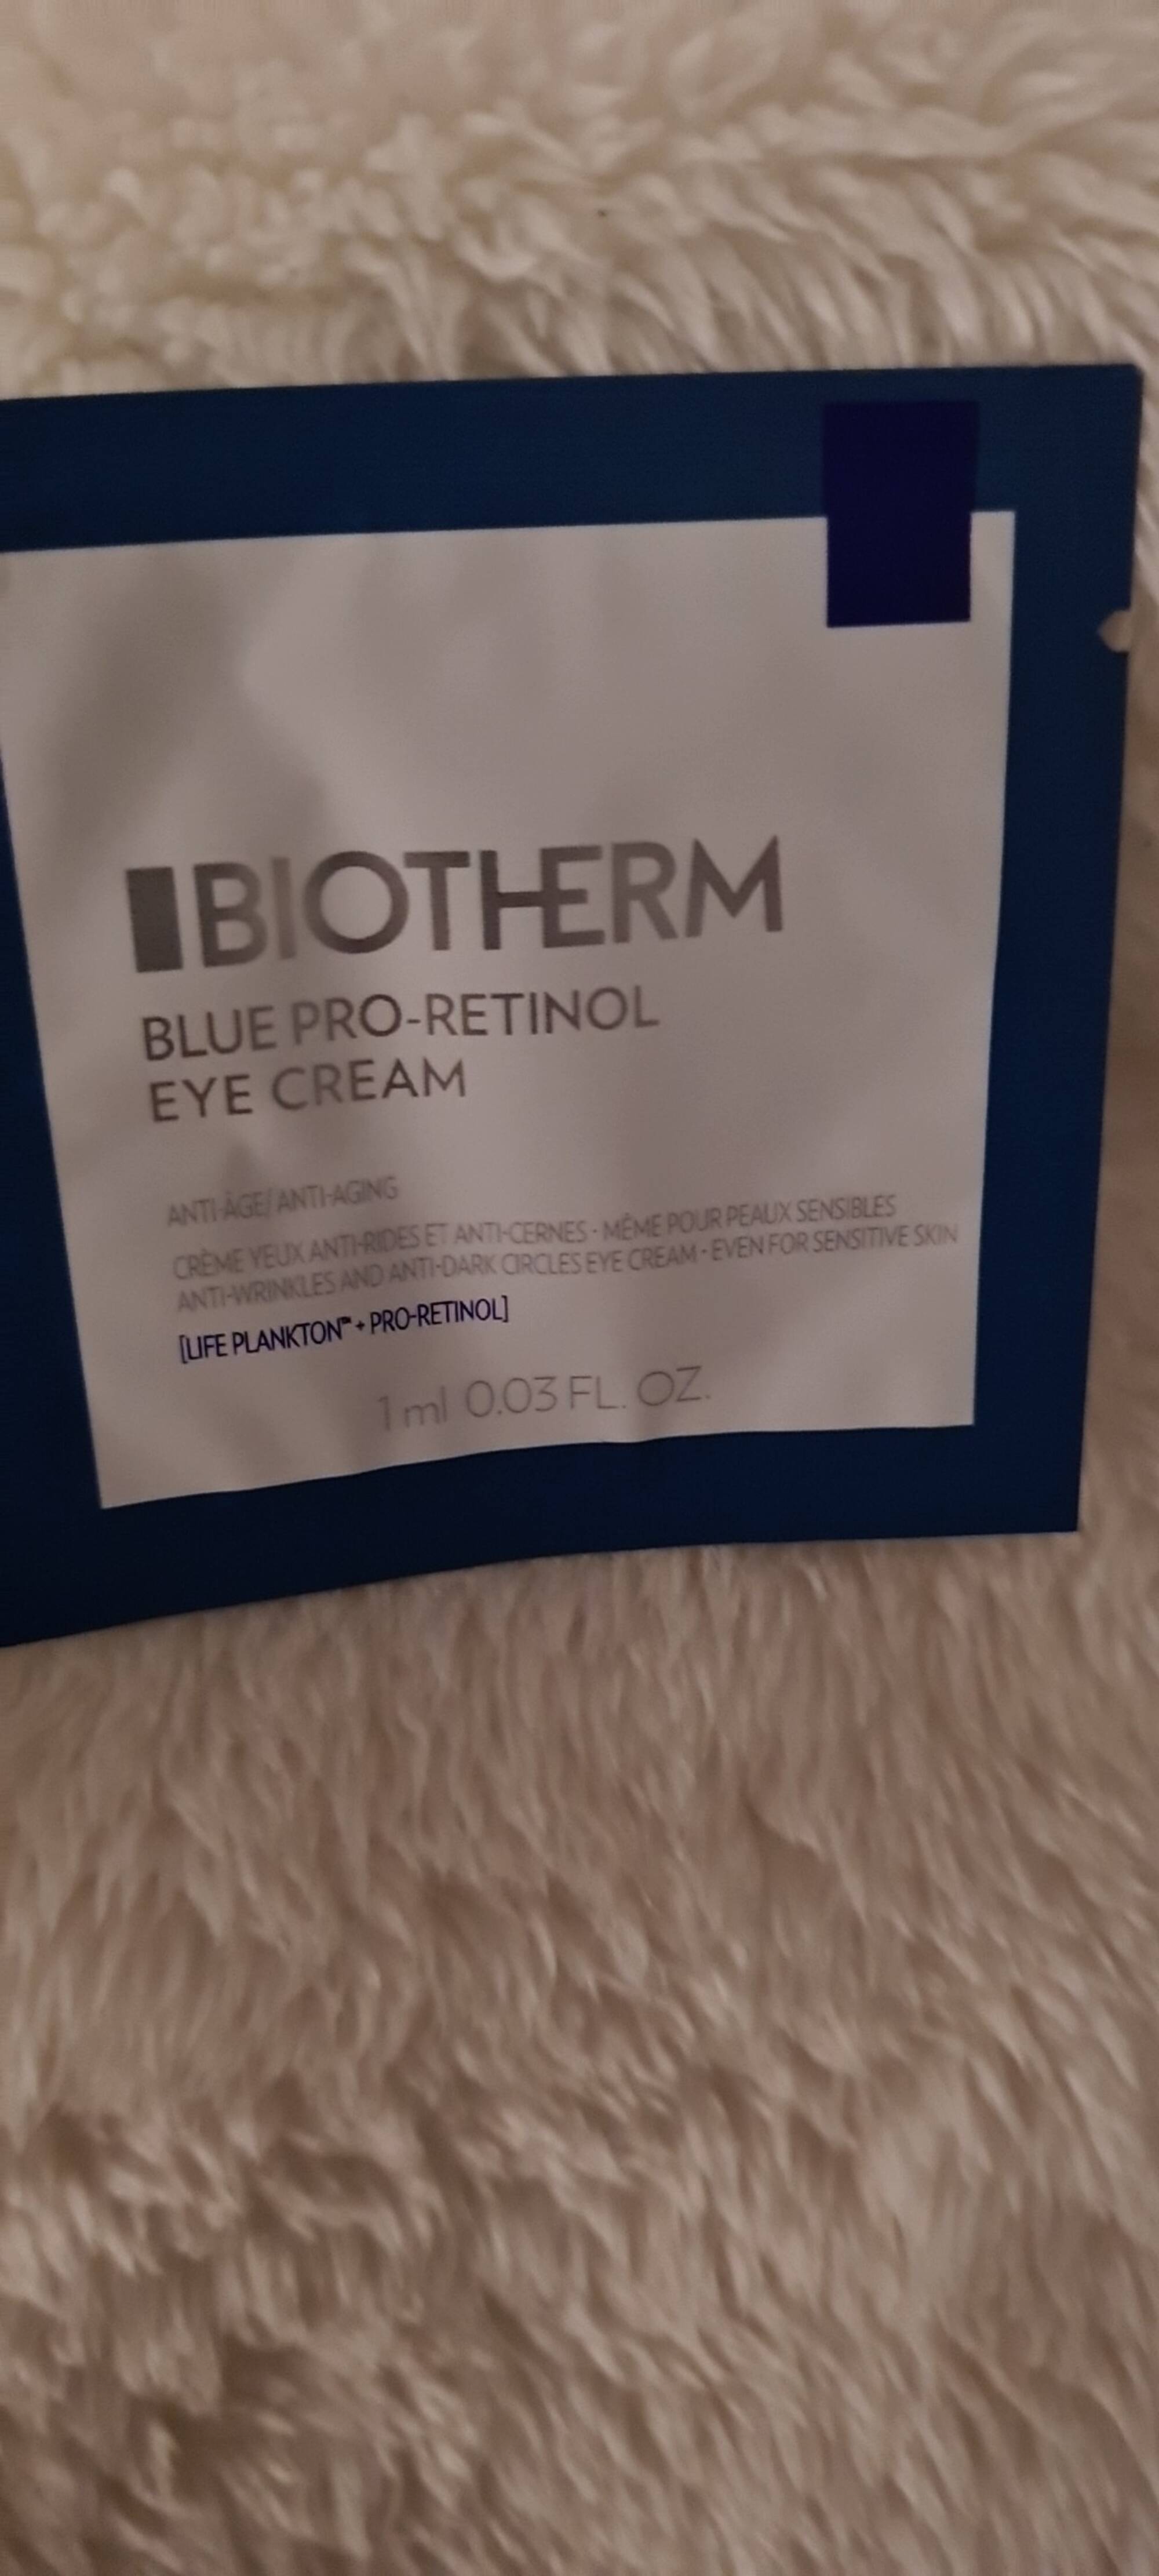 BIOTHERM - Blue pro-retinol - Crème yeux